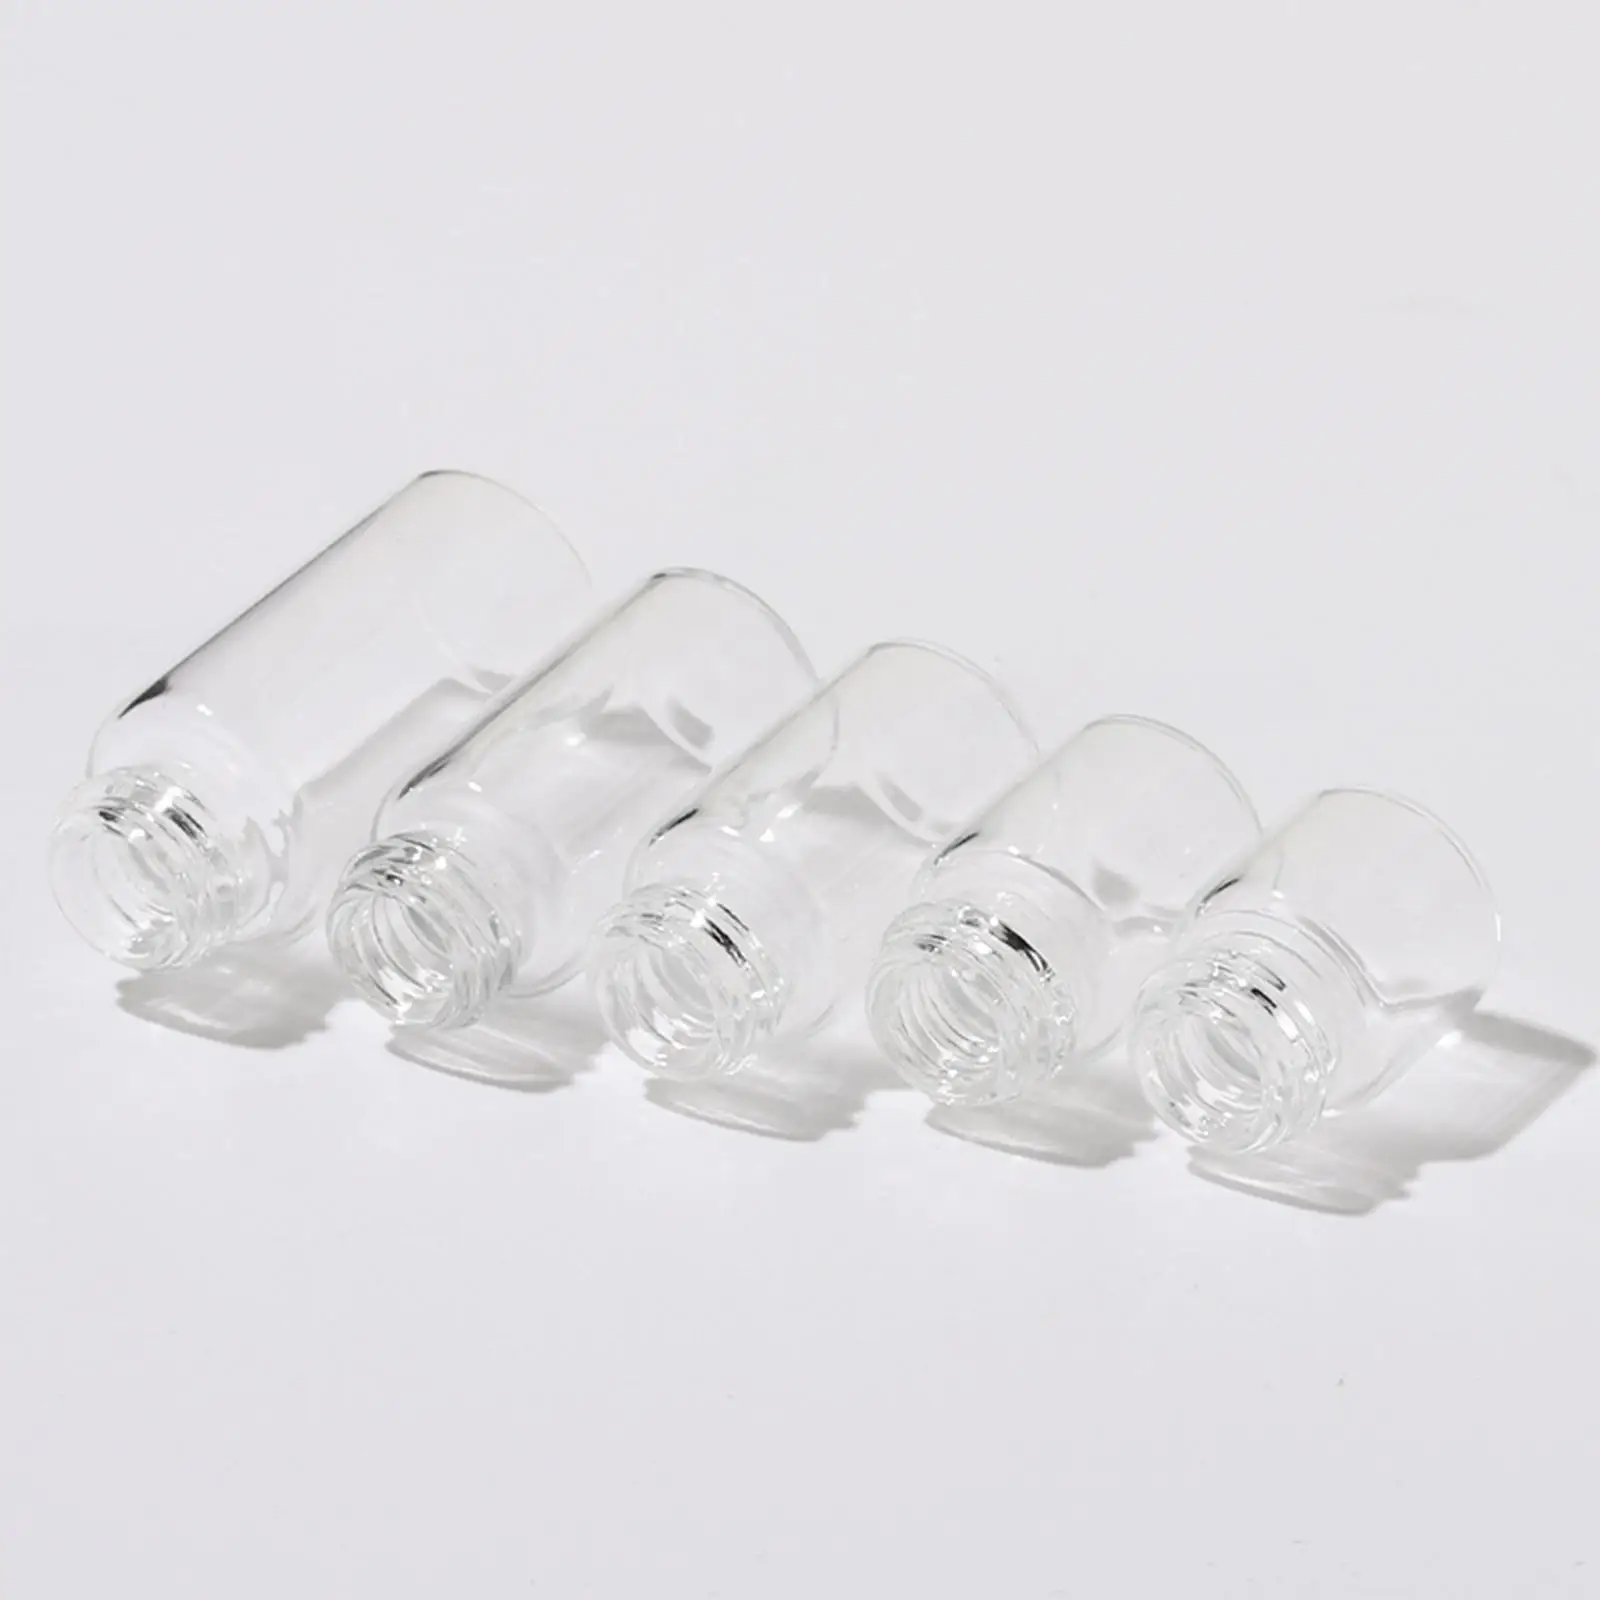 

20 Pieces Empty Glass Dropper Bottles Containers for Perfume Oils Liquids Black 2ml